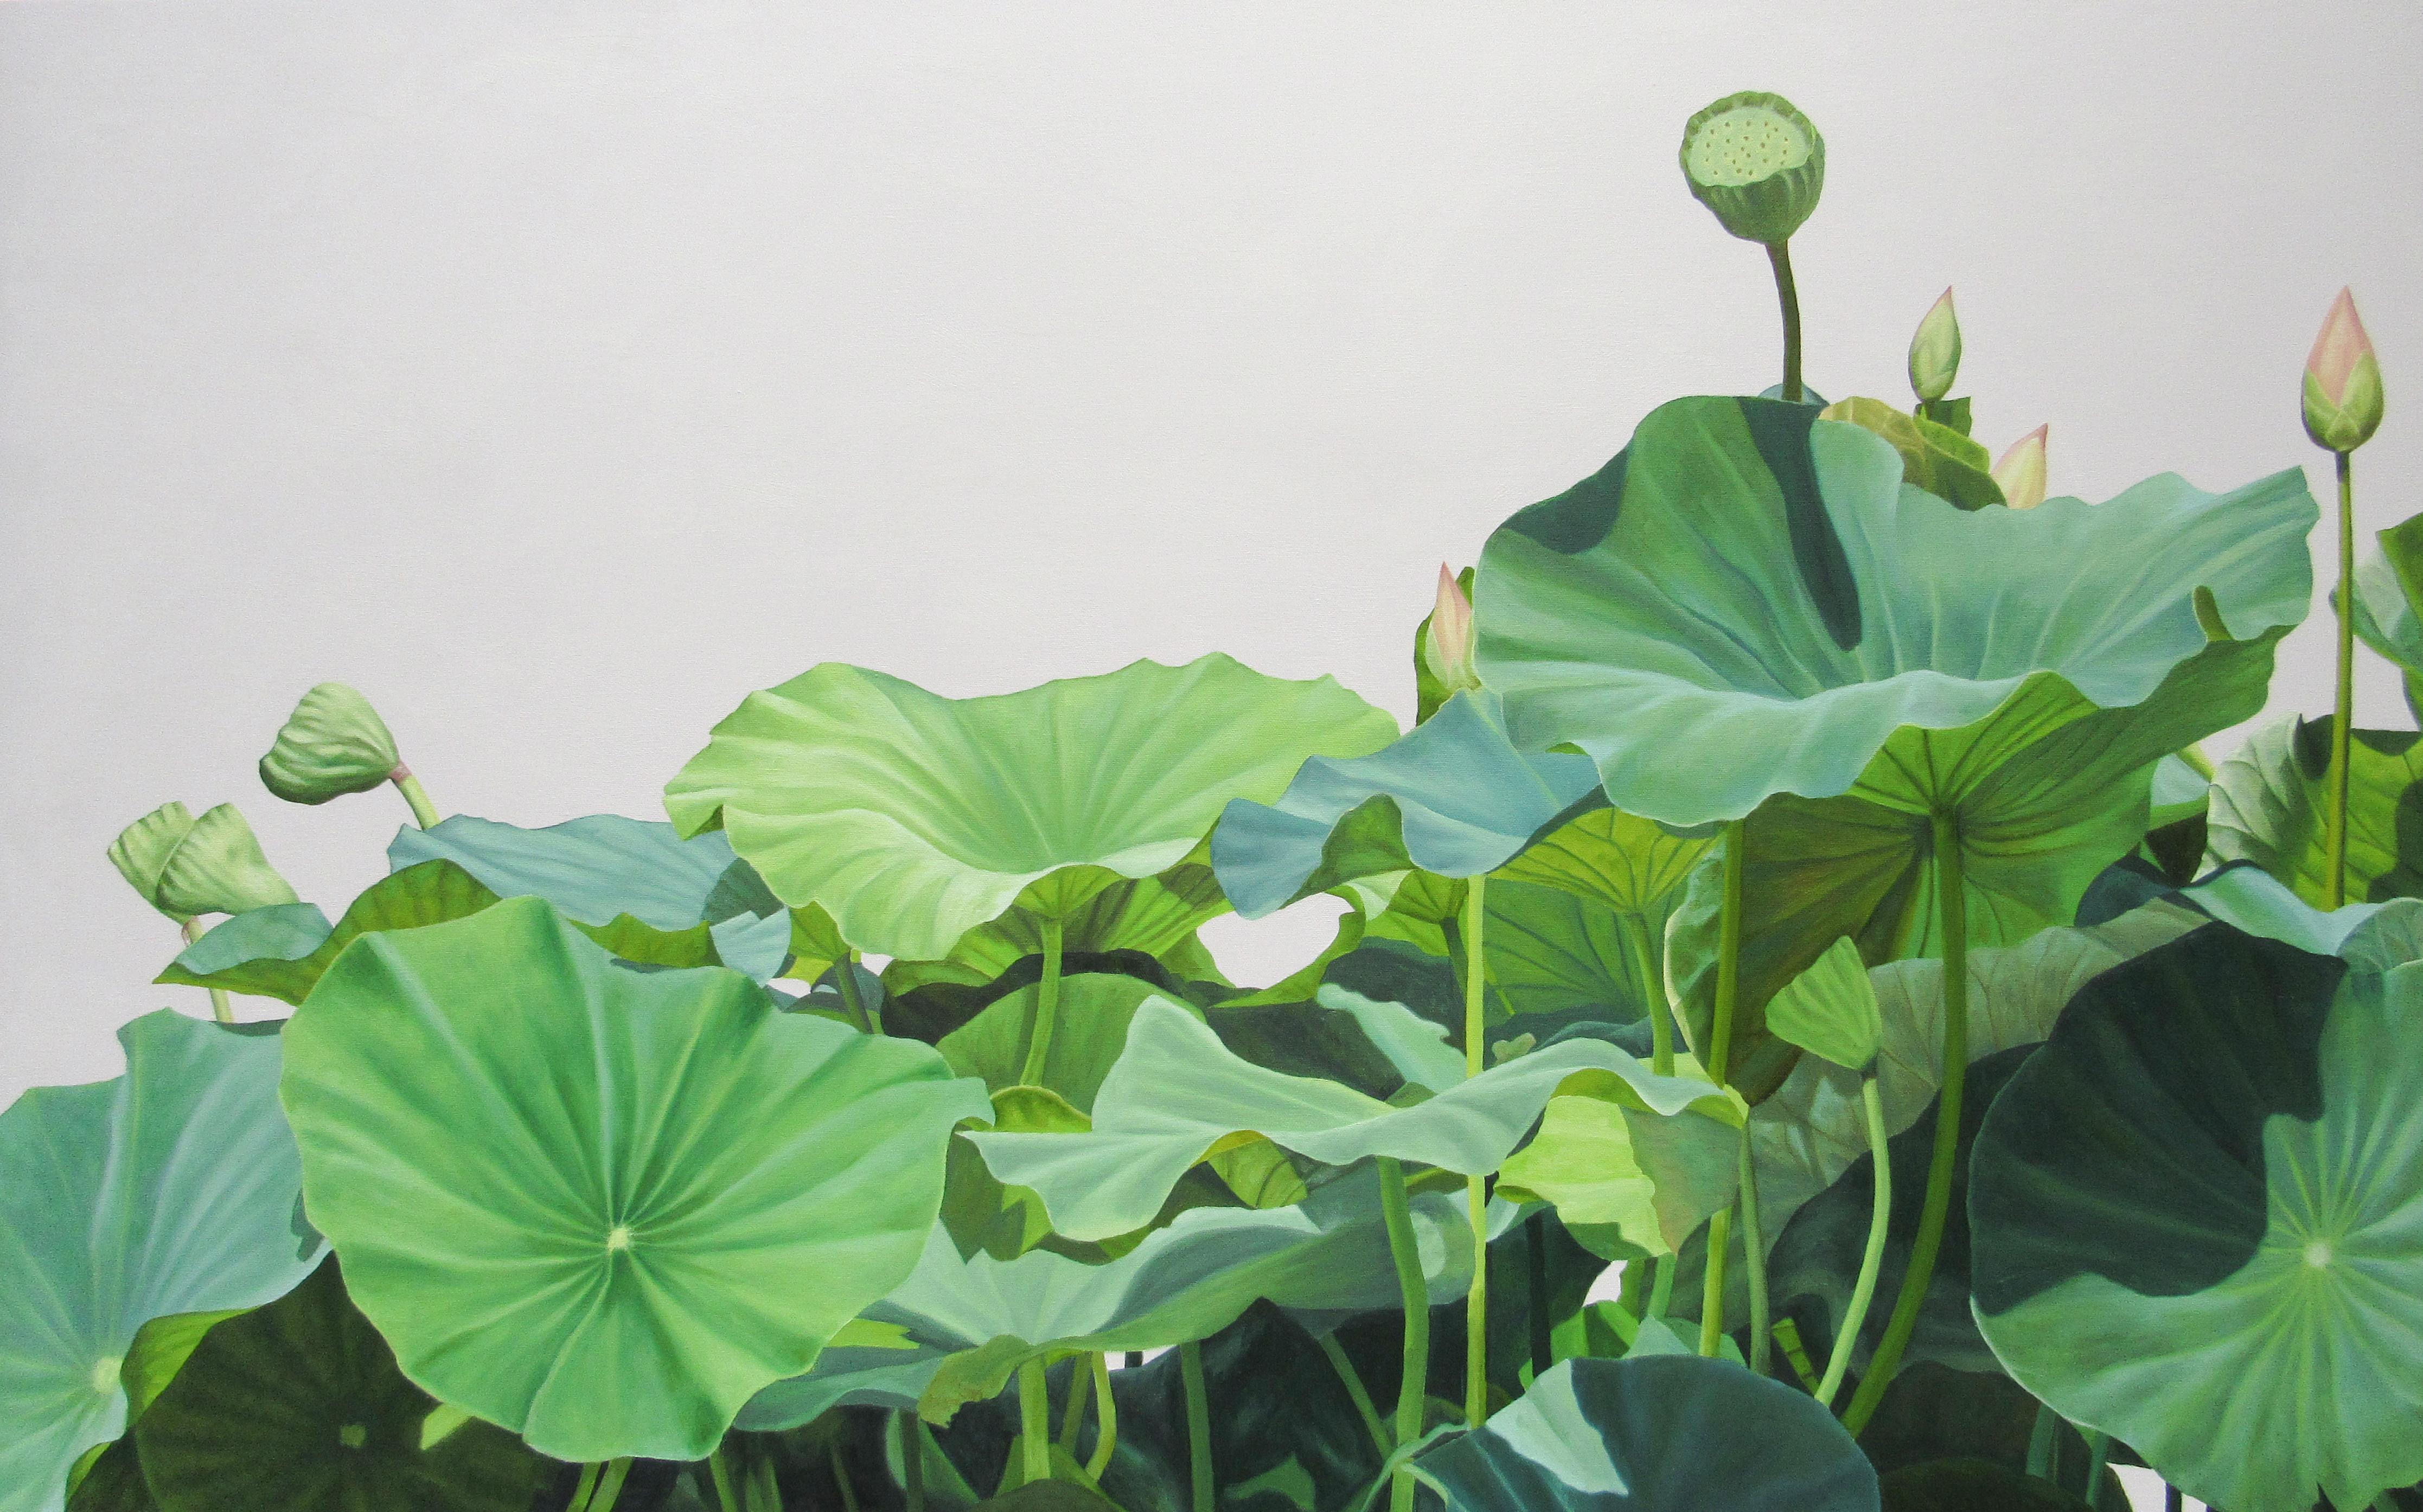 Lotus No. 1 (Contemporary Hard Edge Realist Still Life of Bright Botanicals)